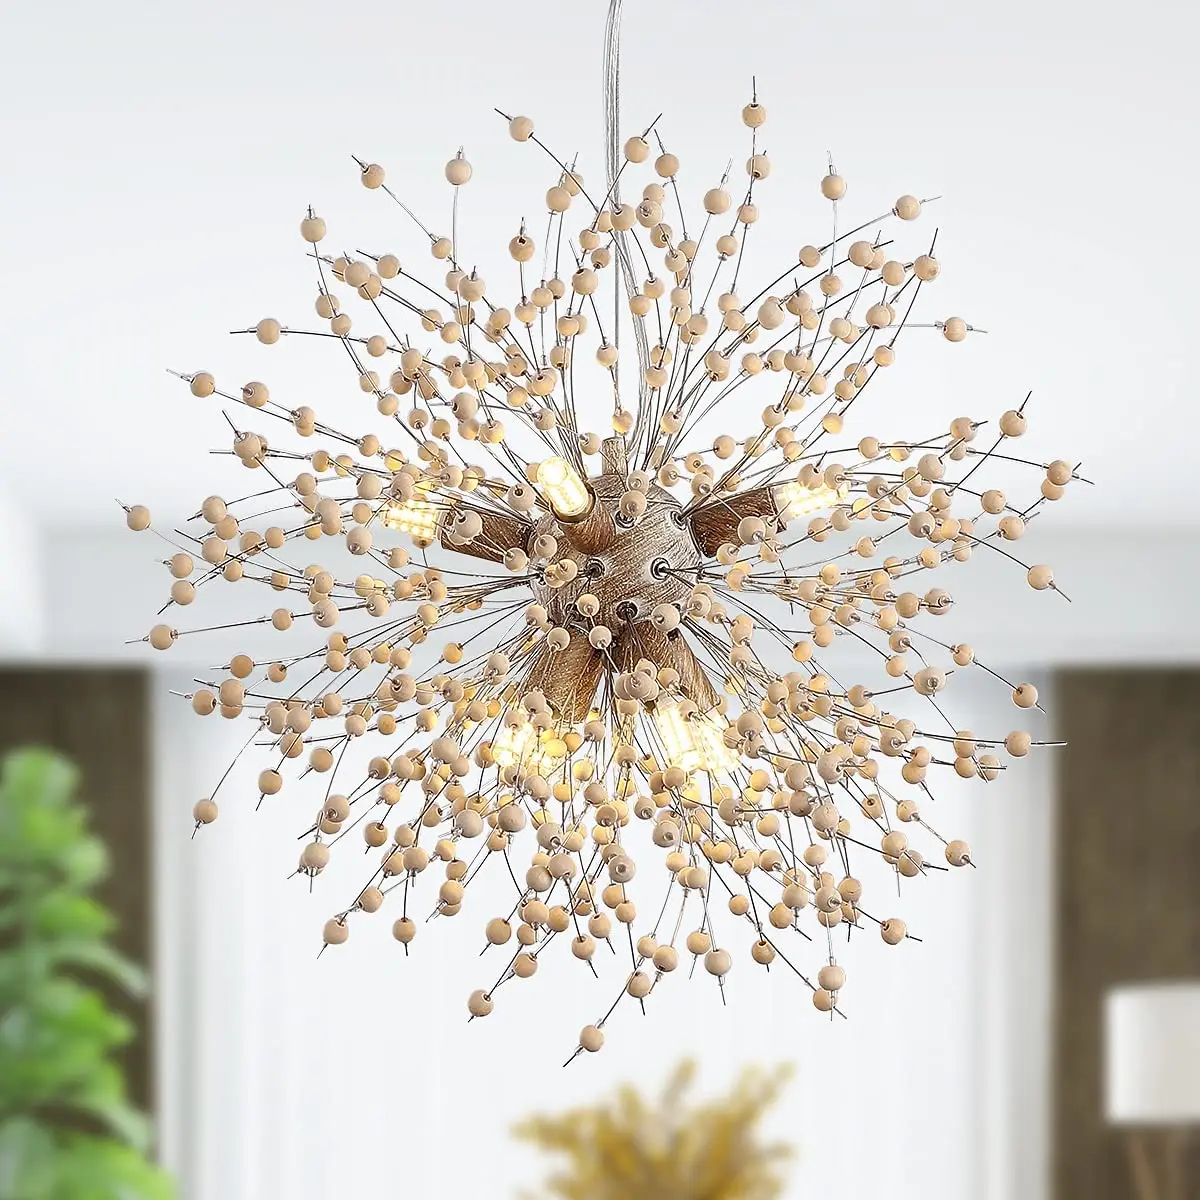 

Modern Wooden Beads Dandelion Chandelier Firework Pendant Lighting 8-Lights Sputnik Hanging Fixture for Living(G9 Bulb Base)